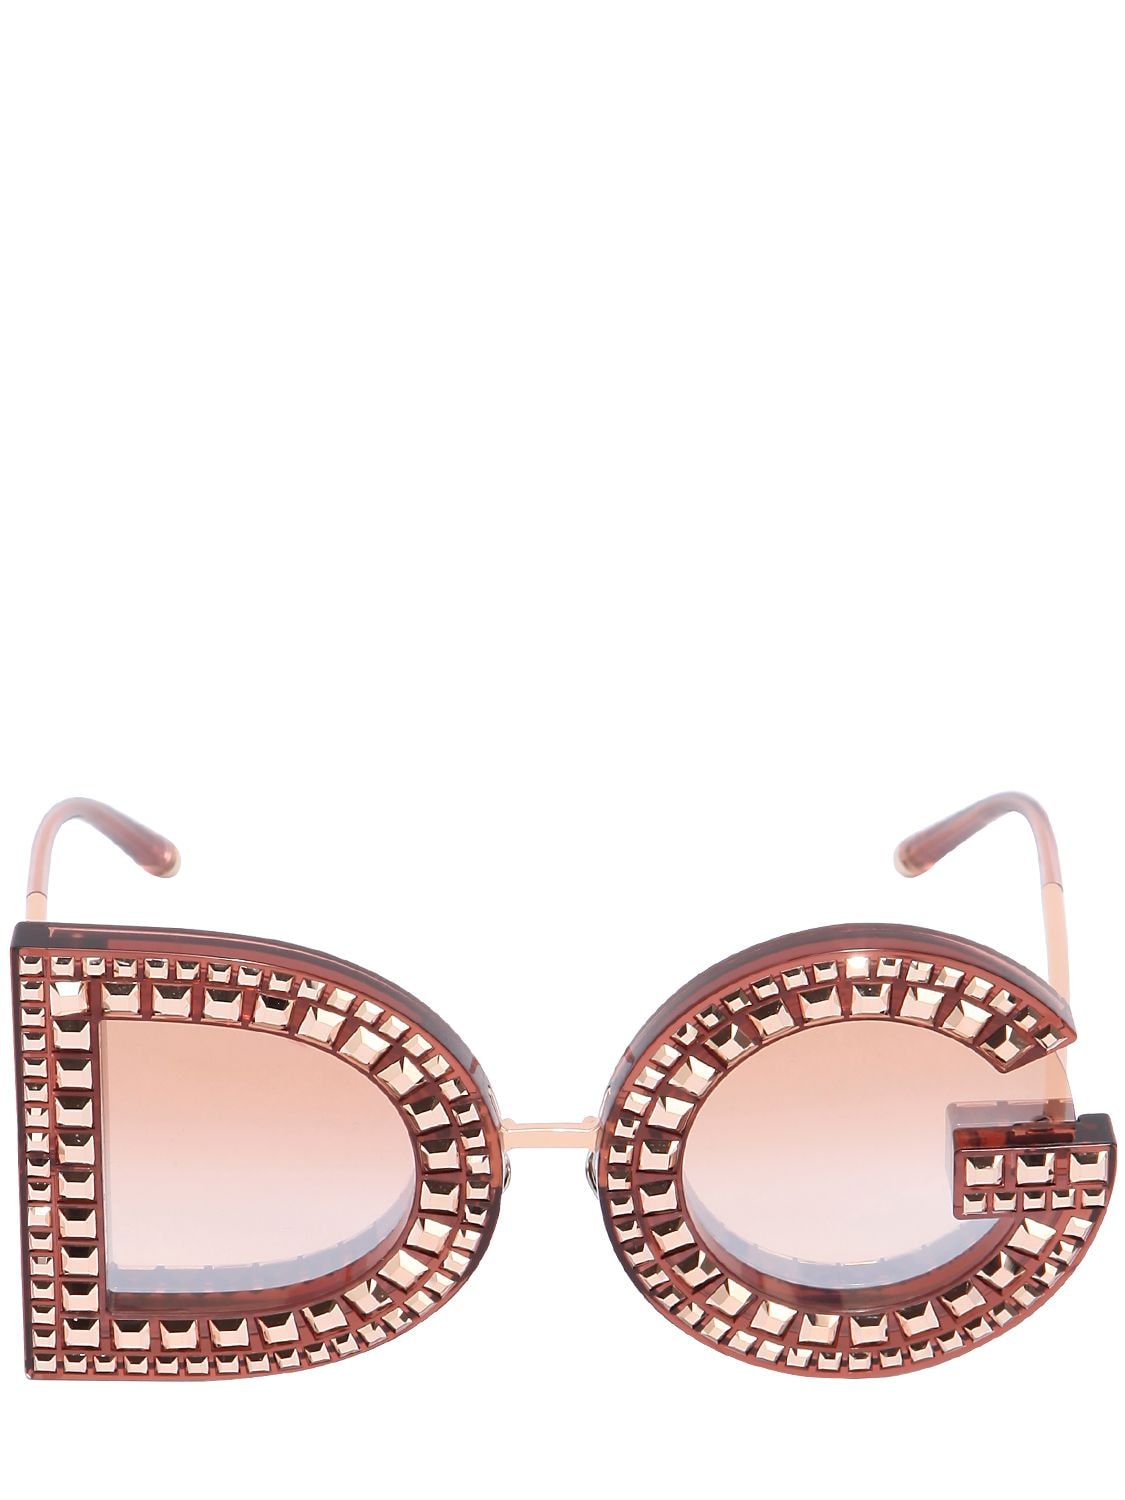 Dolce & Gabbana Dg Crystals Embellished Sunglasses In Pink